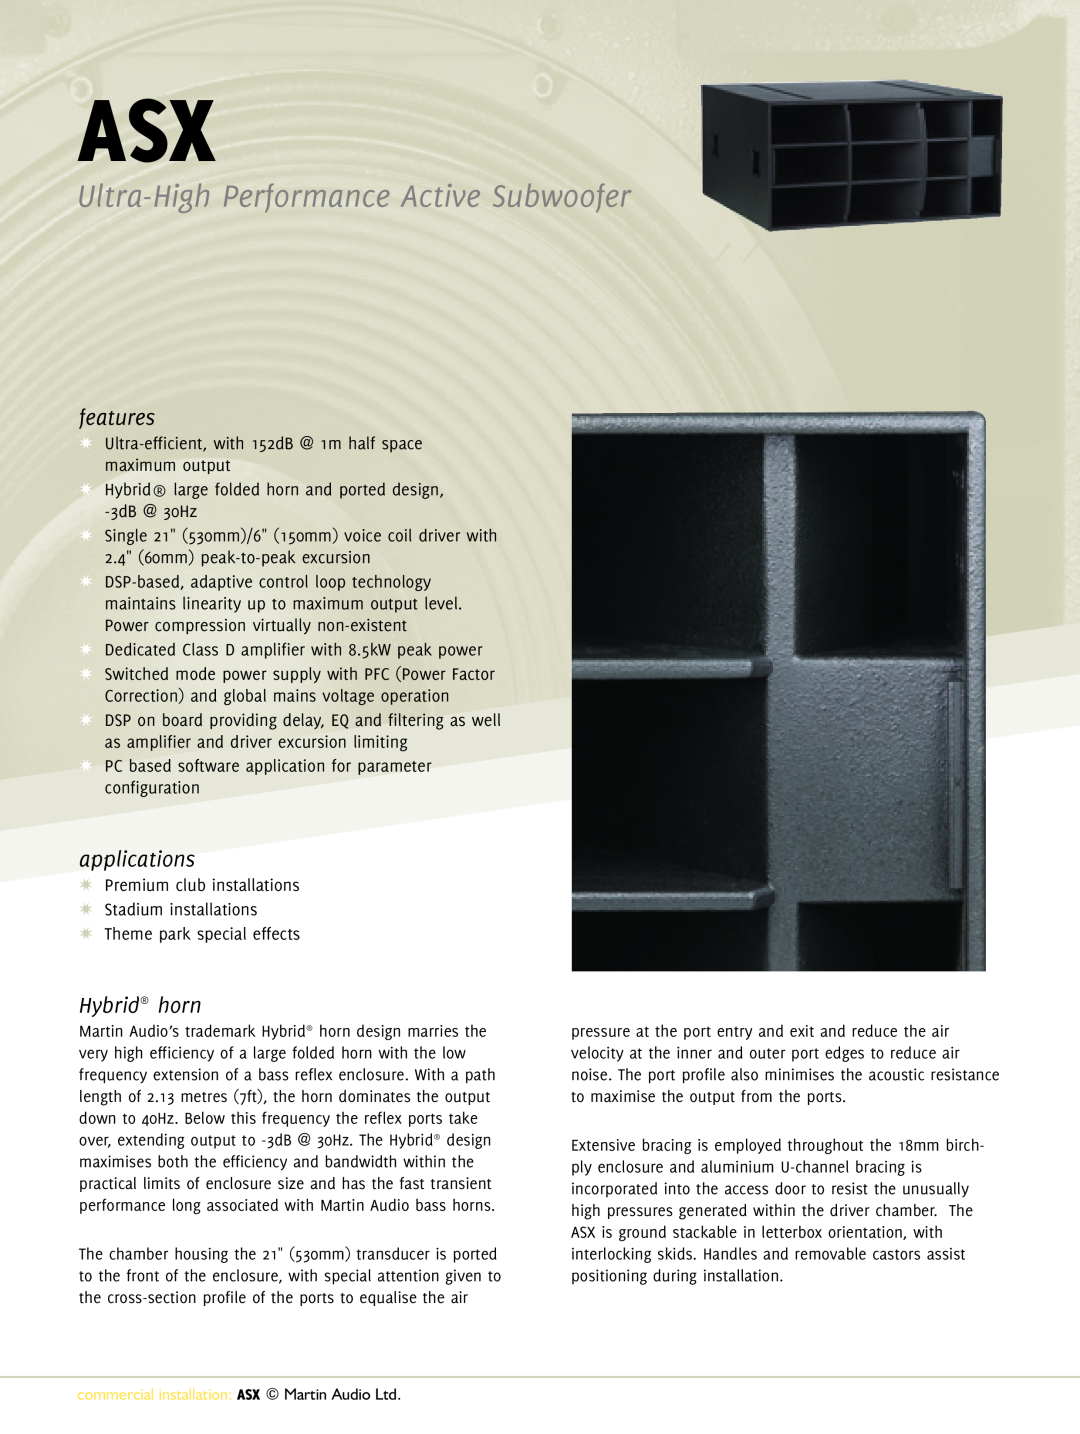 Martin Audio ASX manual features, applications, Hybrid horn, Ultra-HighPerformance Active Subwoofer 